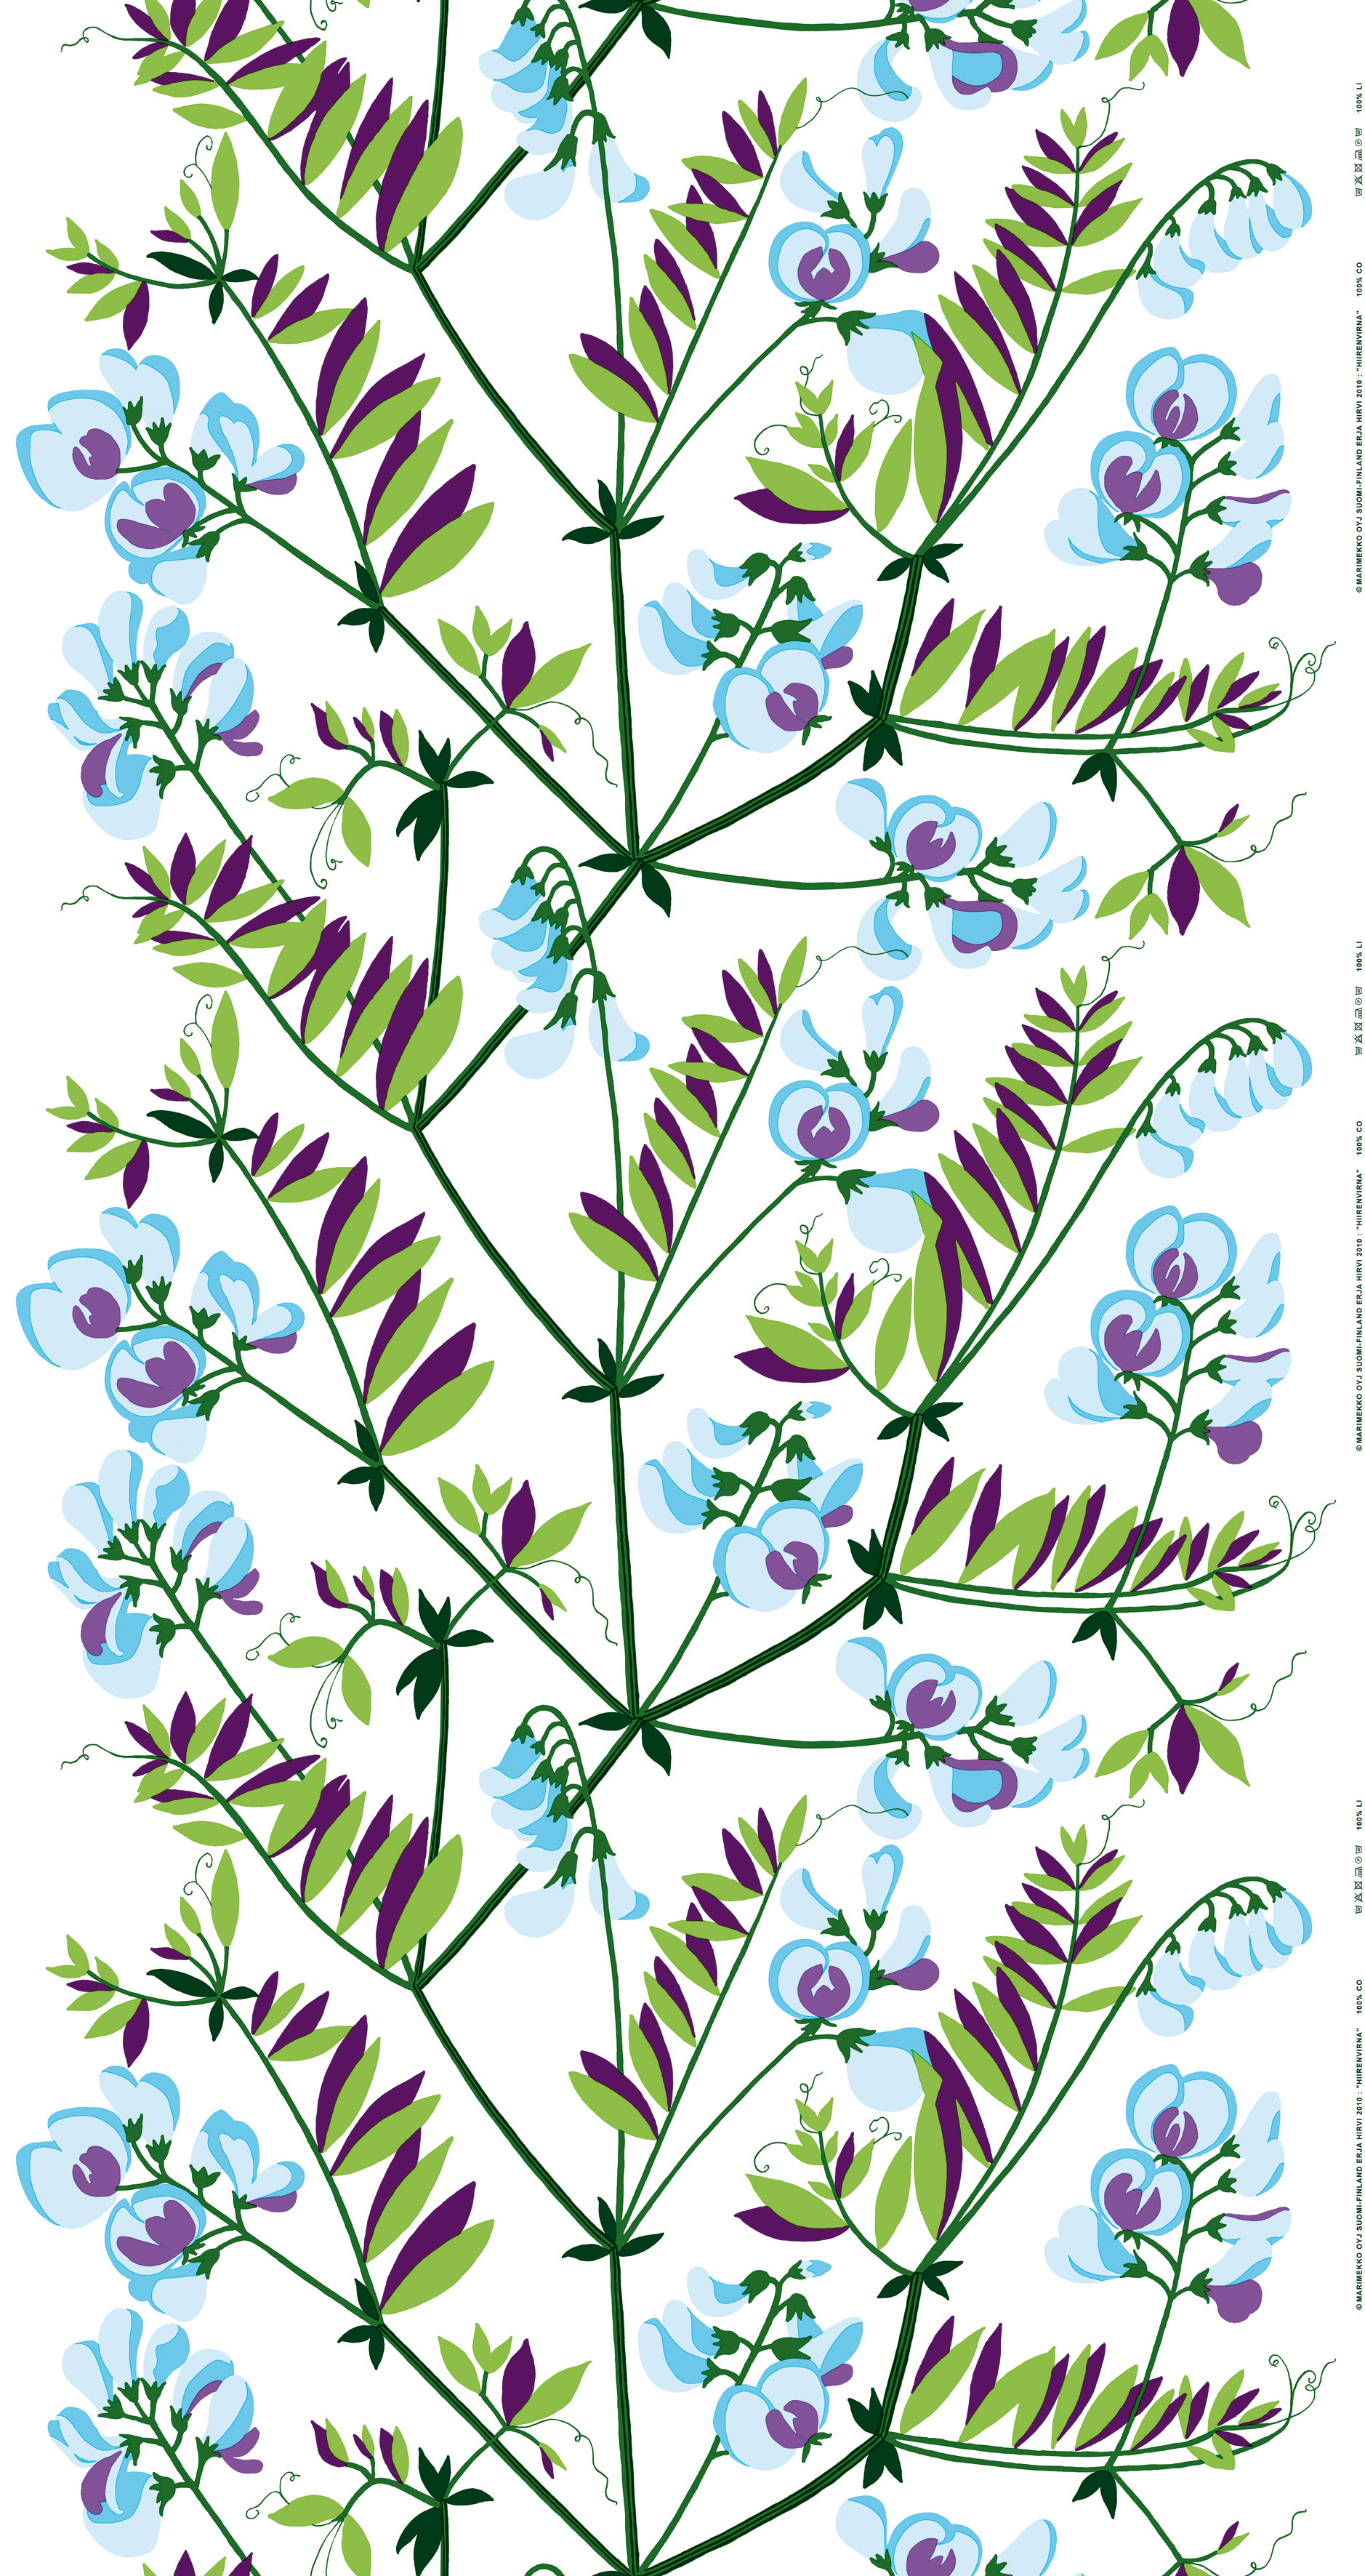 Marimekko Hiirenvirna Pattern Print